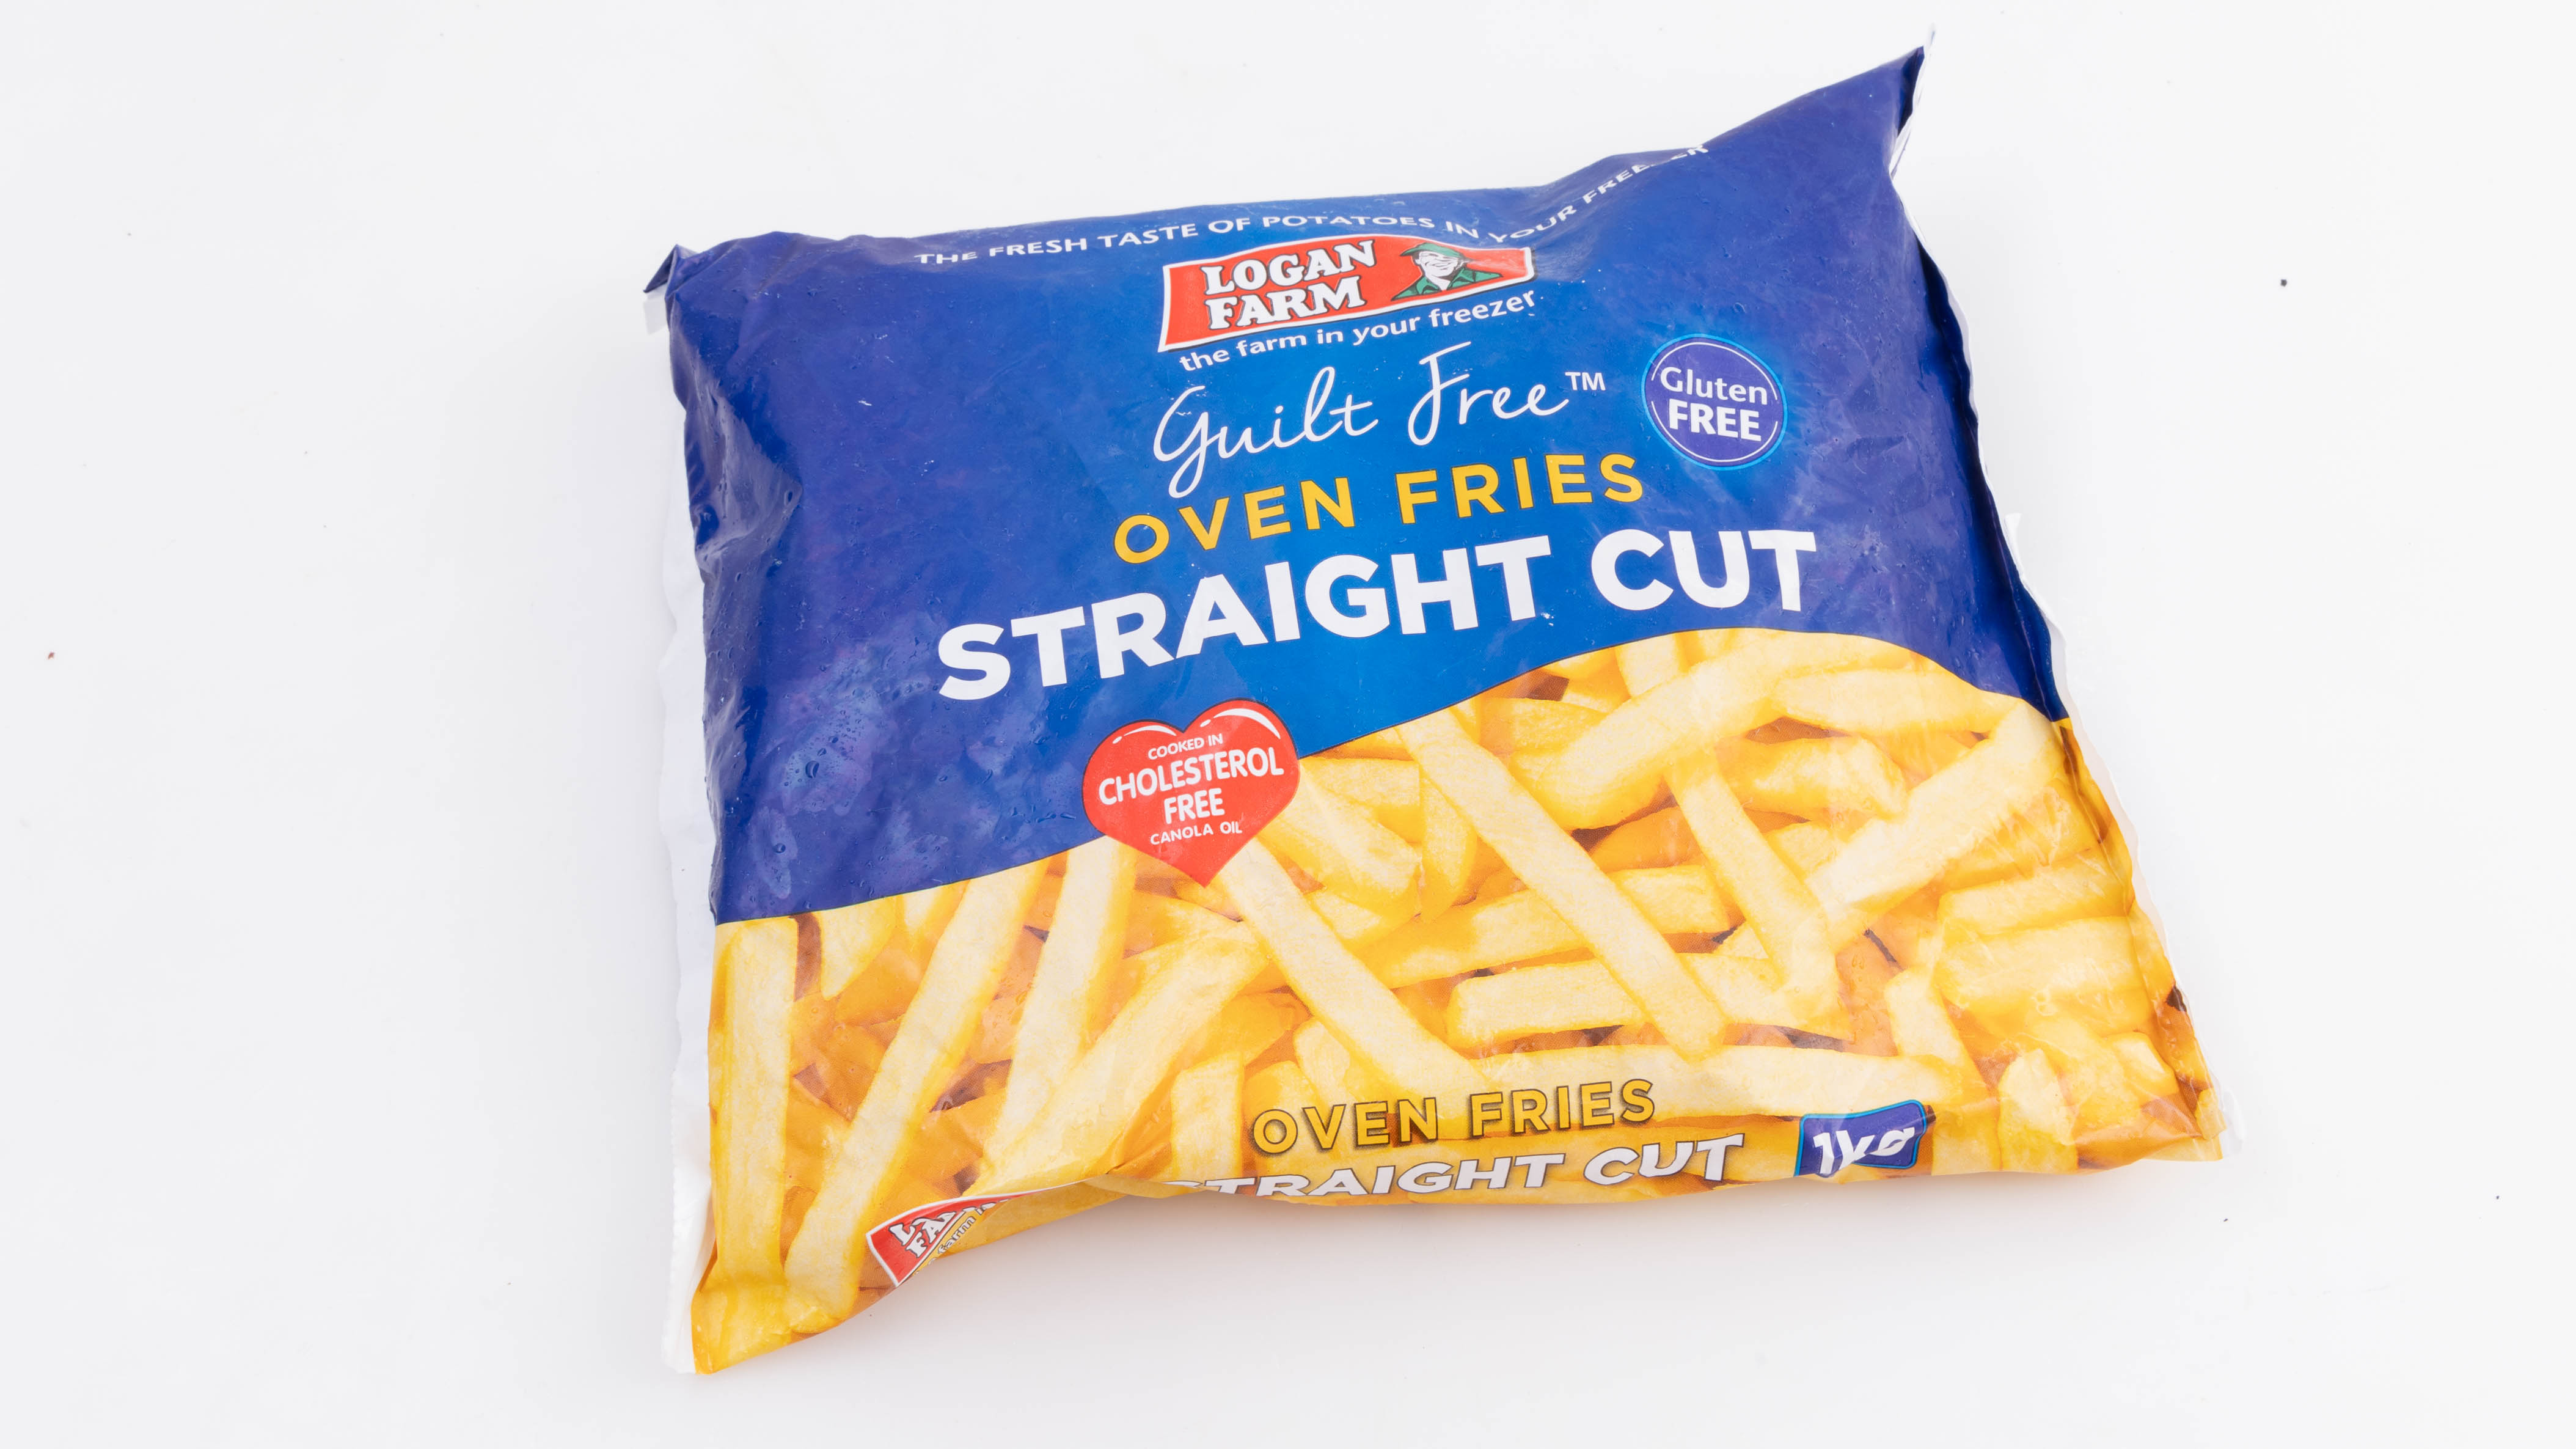 Logan Farm Guilt Free Straight Cut Oven Fries carousel image